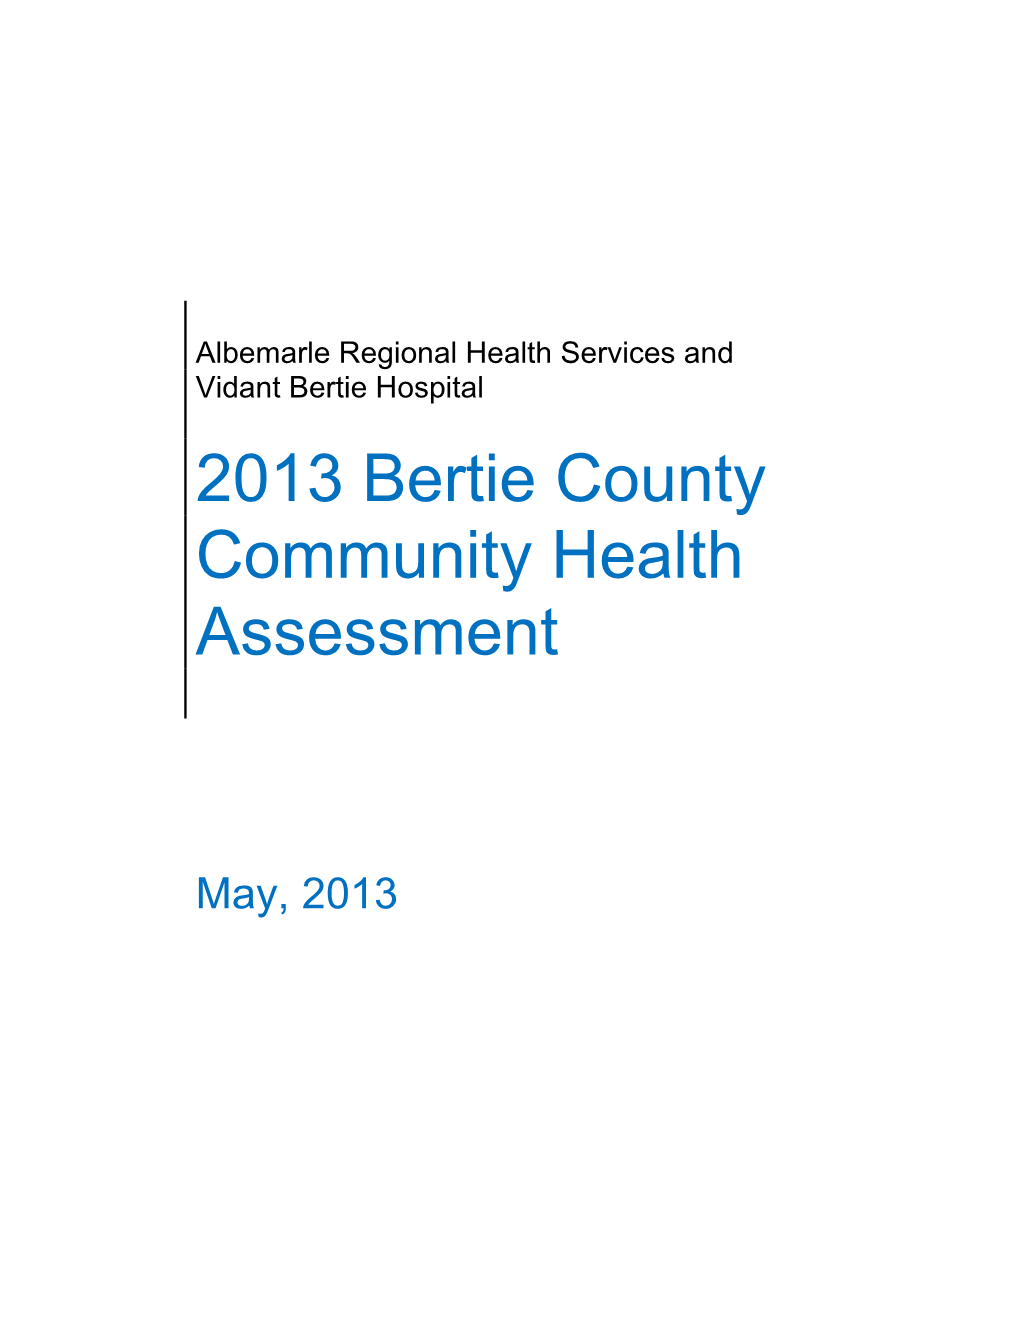 Bertie County Community Health Assessment